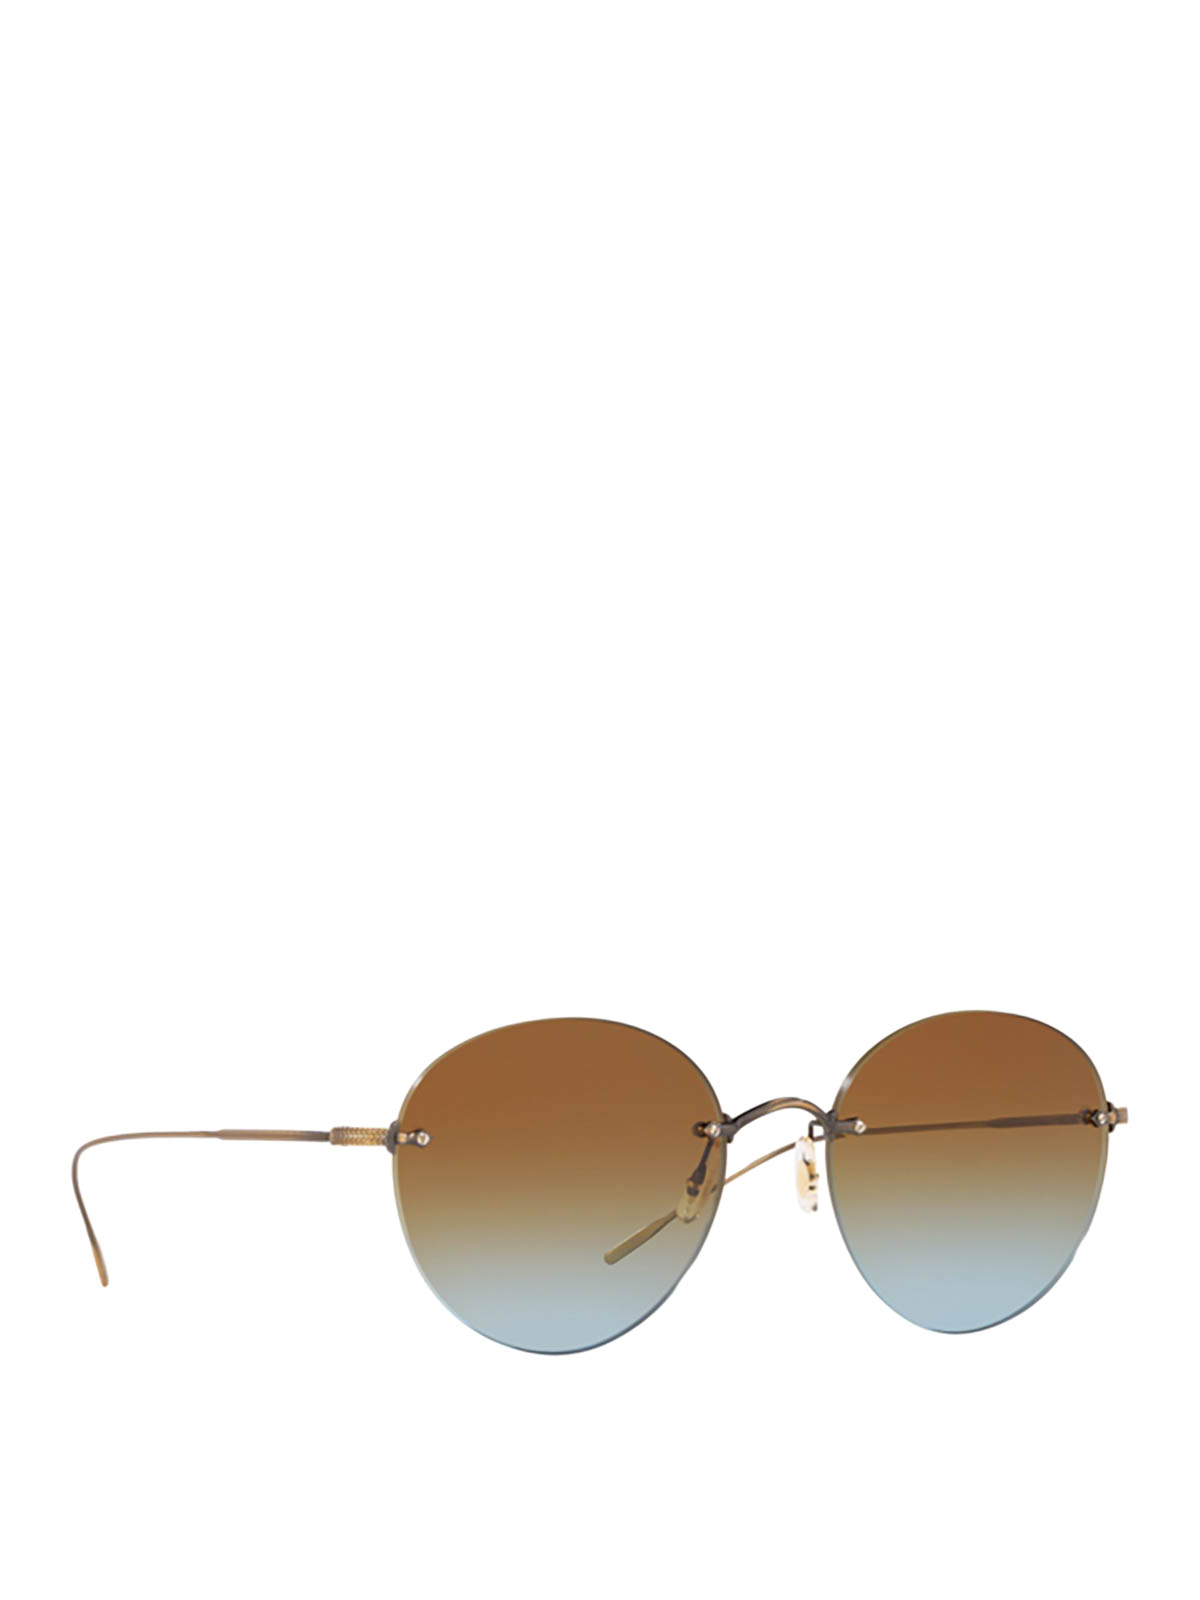 Sunglasses Oliver Peoples - Coliena sunglasses. - OV1264S52845D